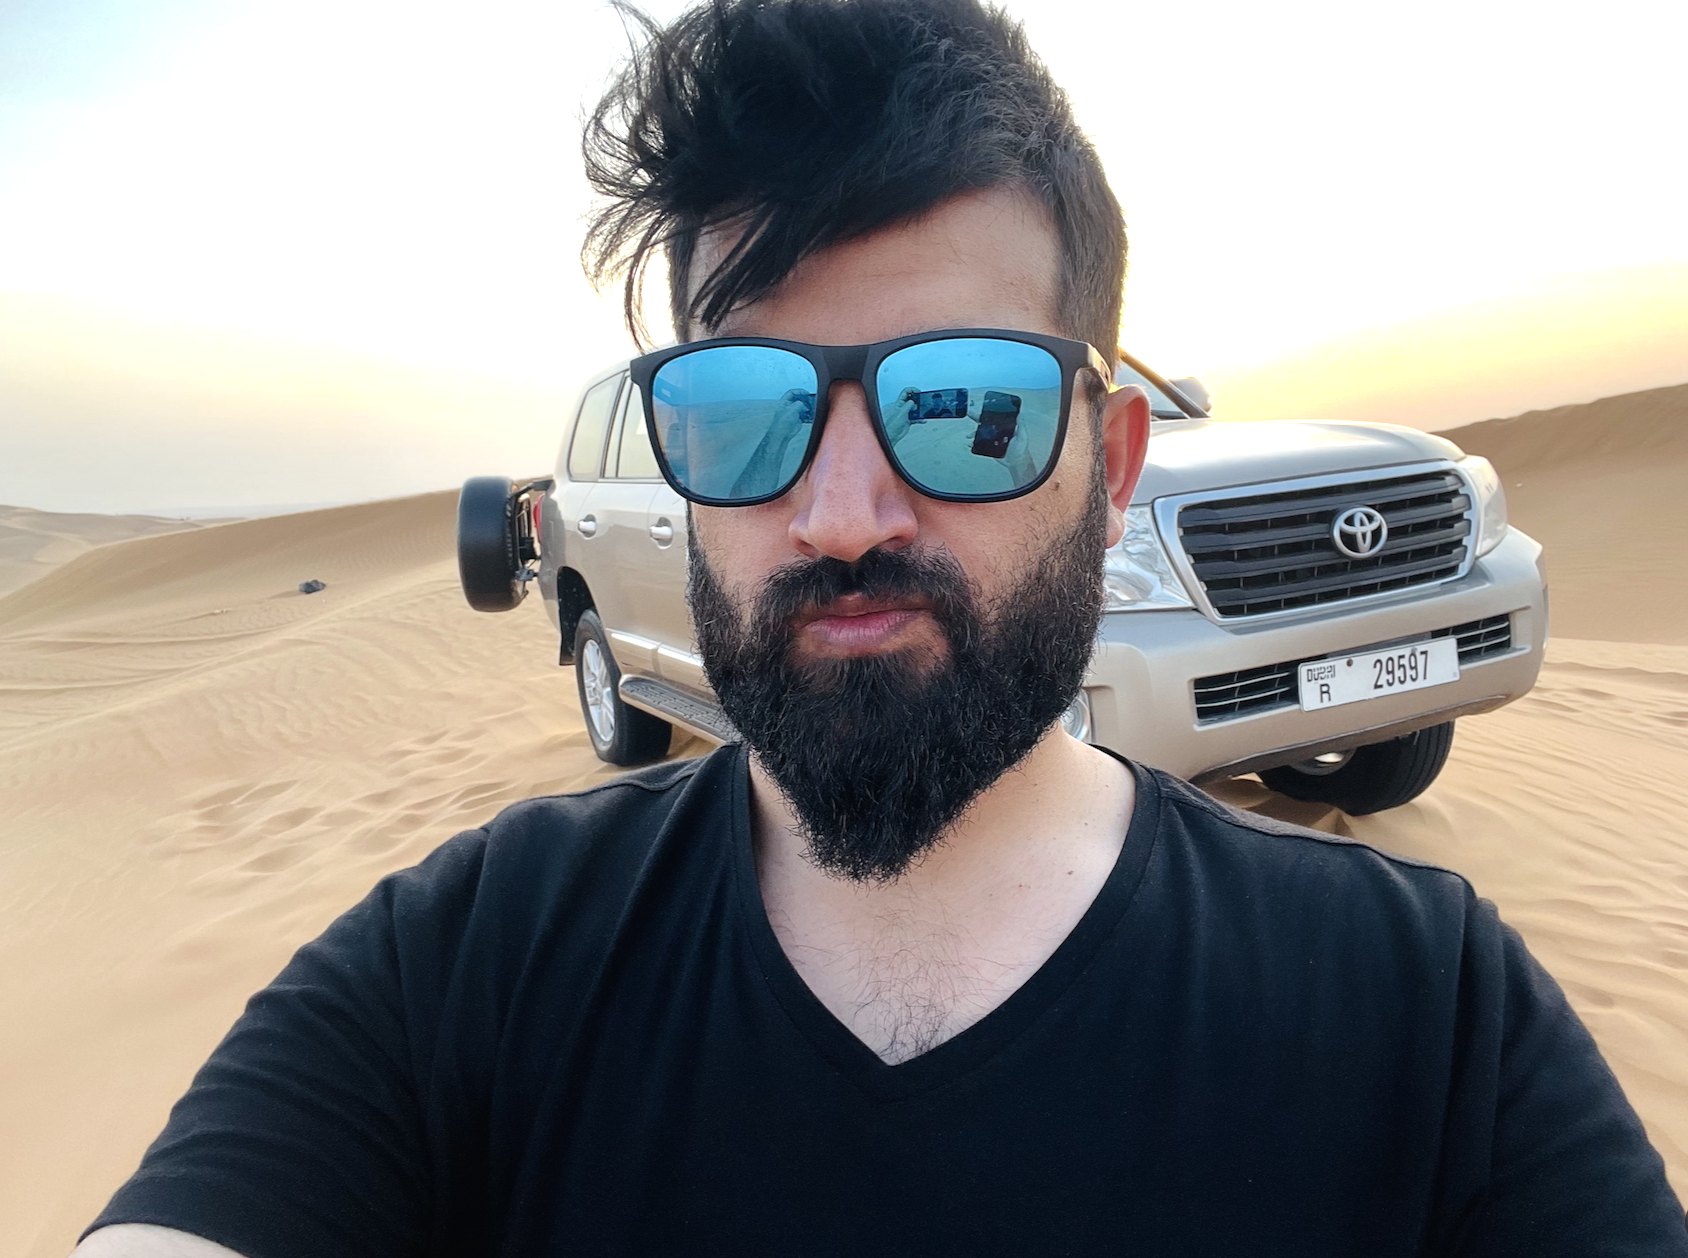 a man taking a selfie in the desert